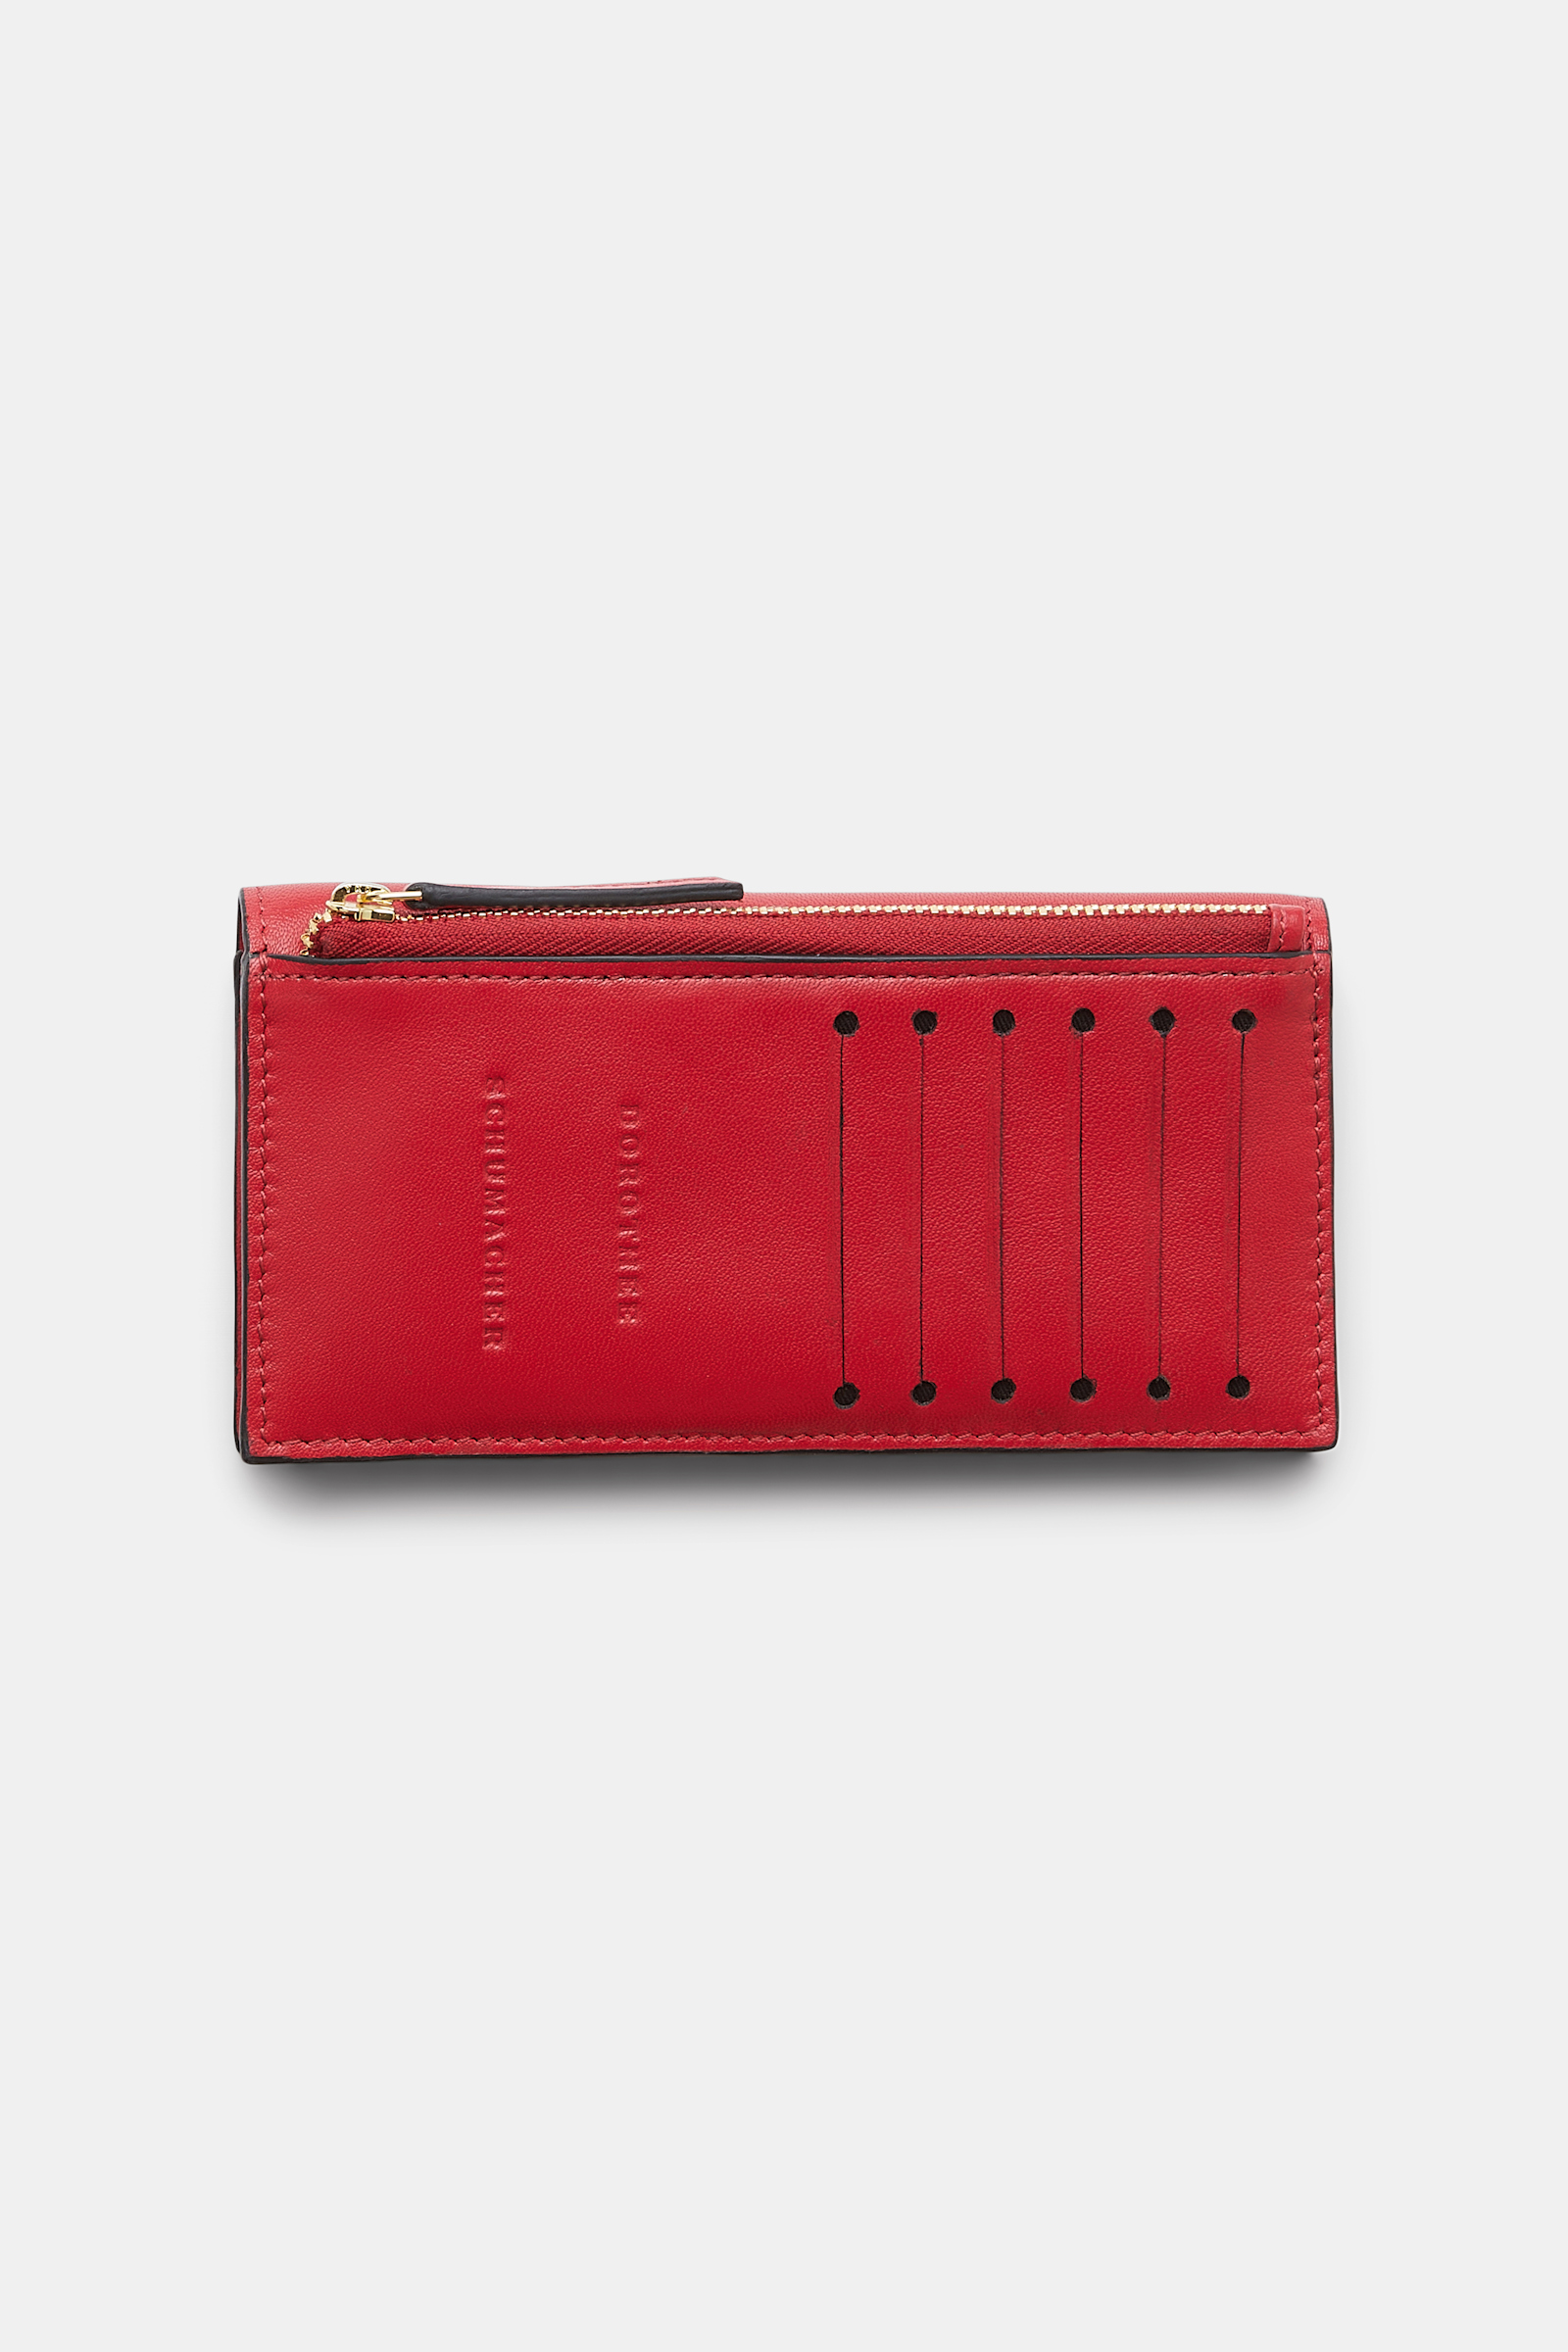 Dorothee Schumacher Envelope wallet cherry red